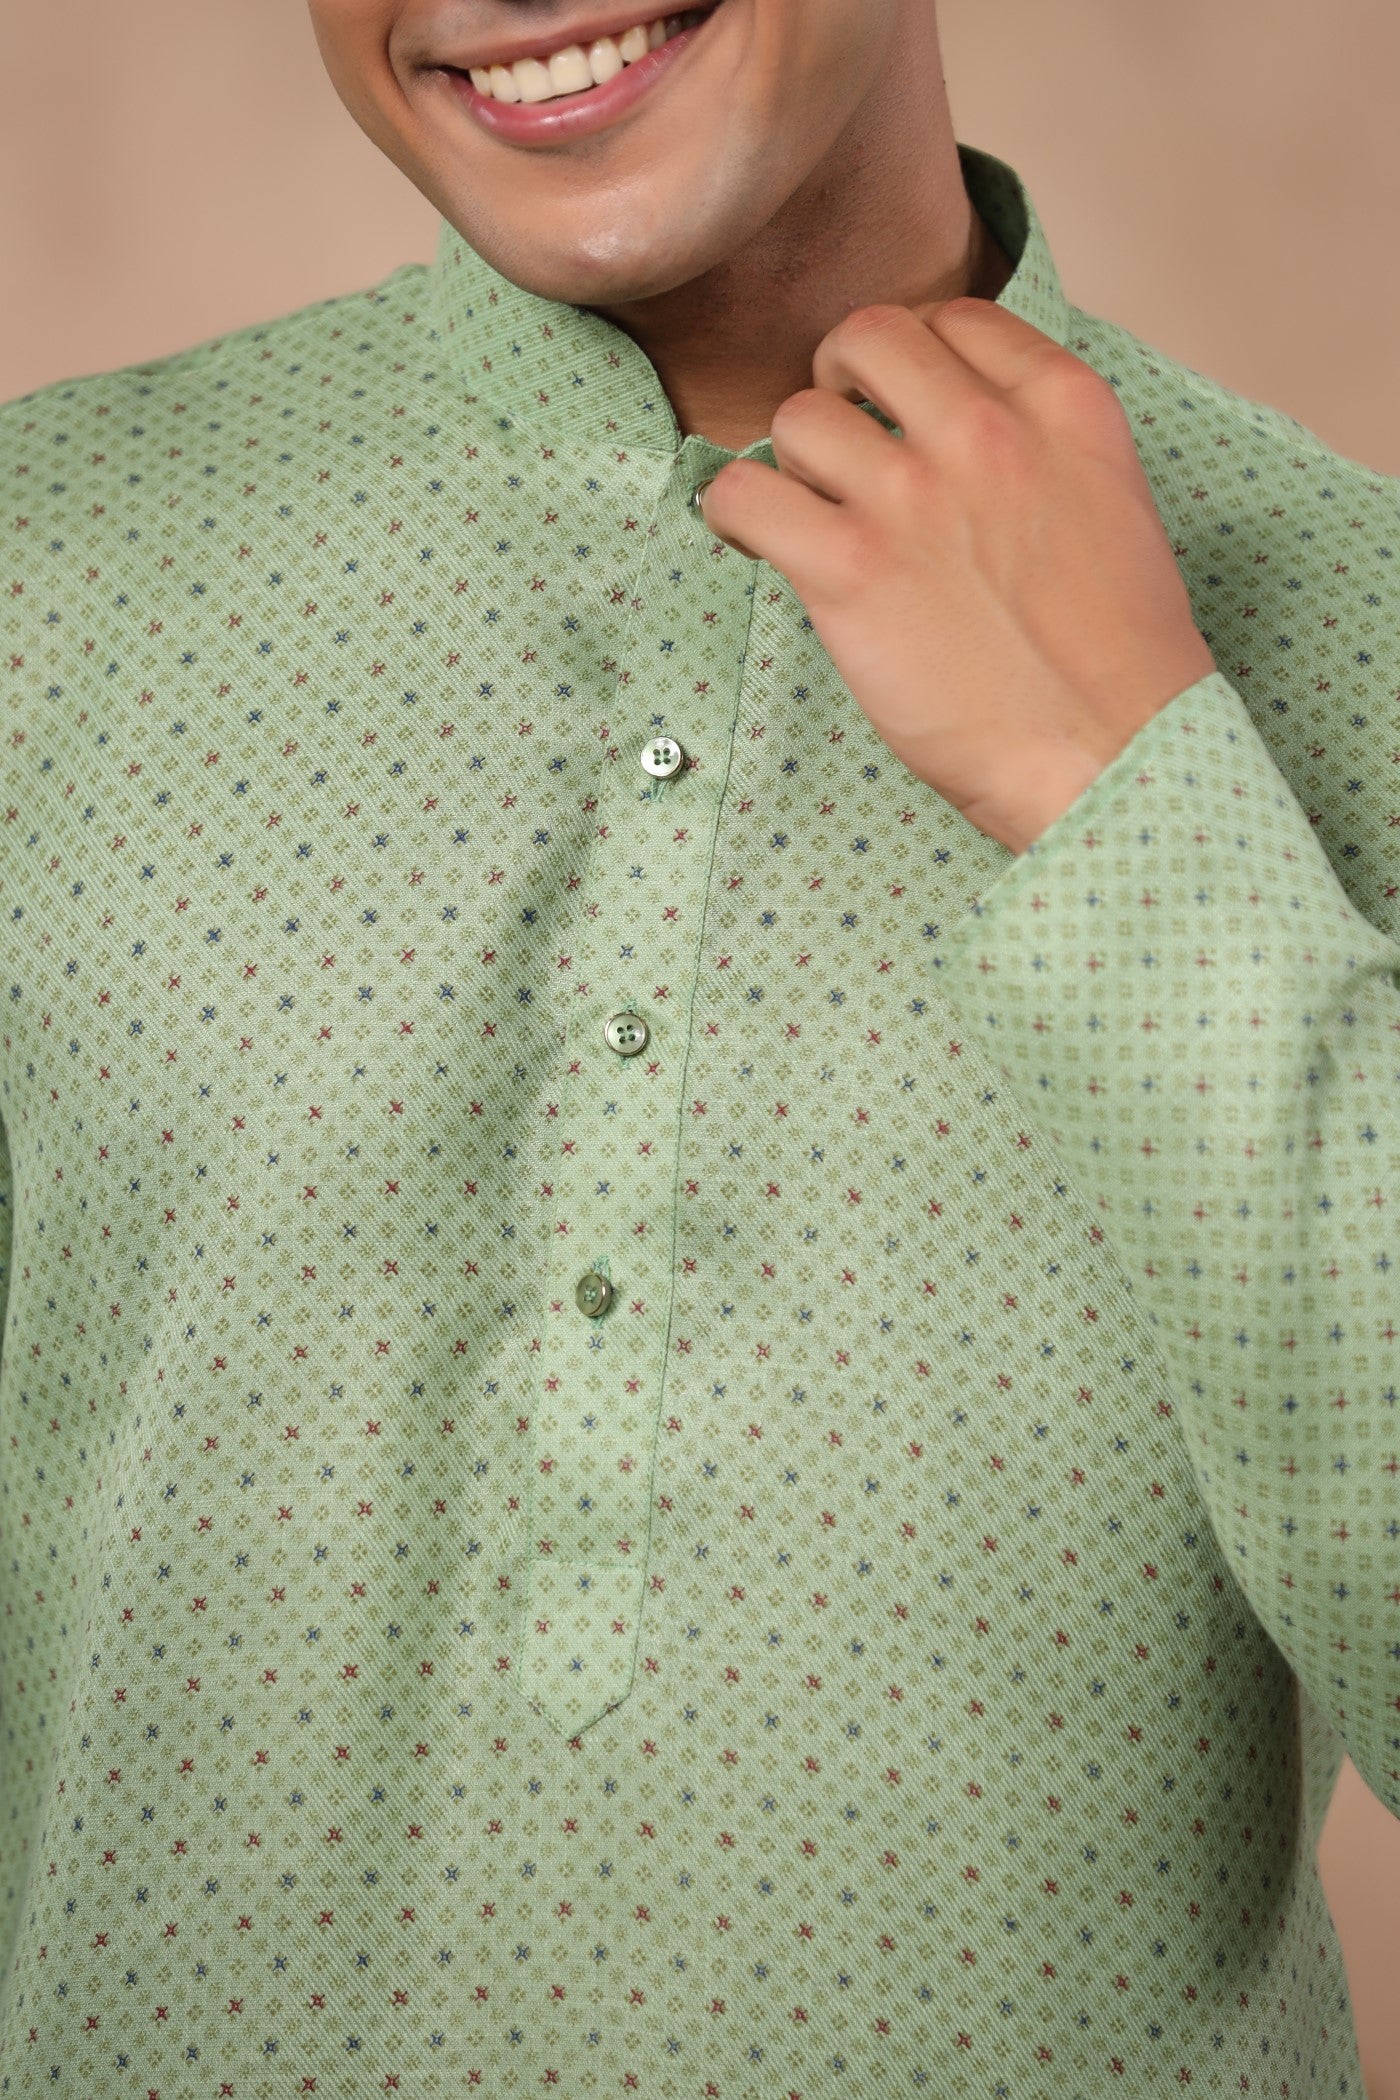 B Green Cotton Kurta Pajama For Men